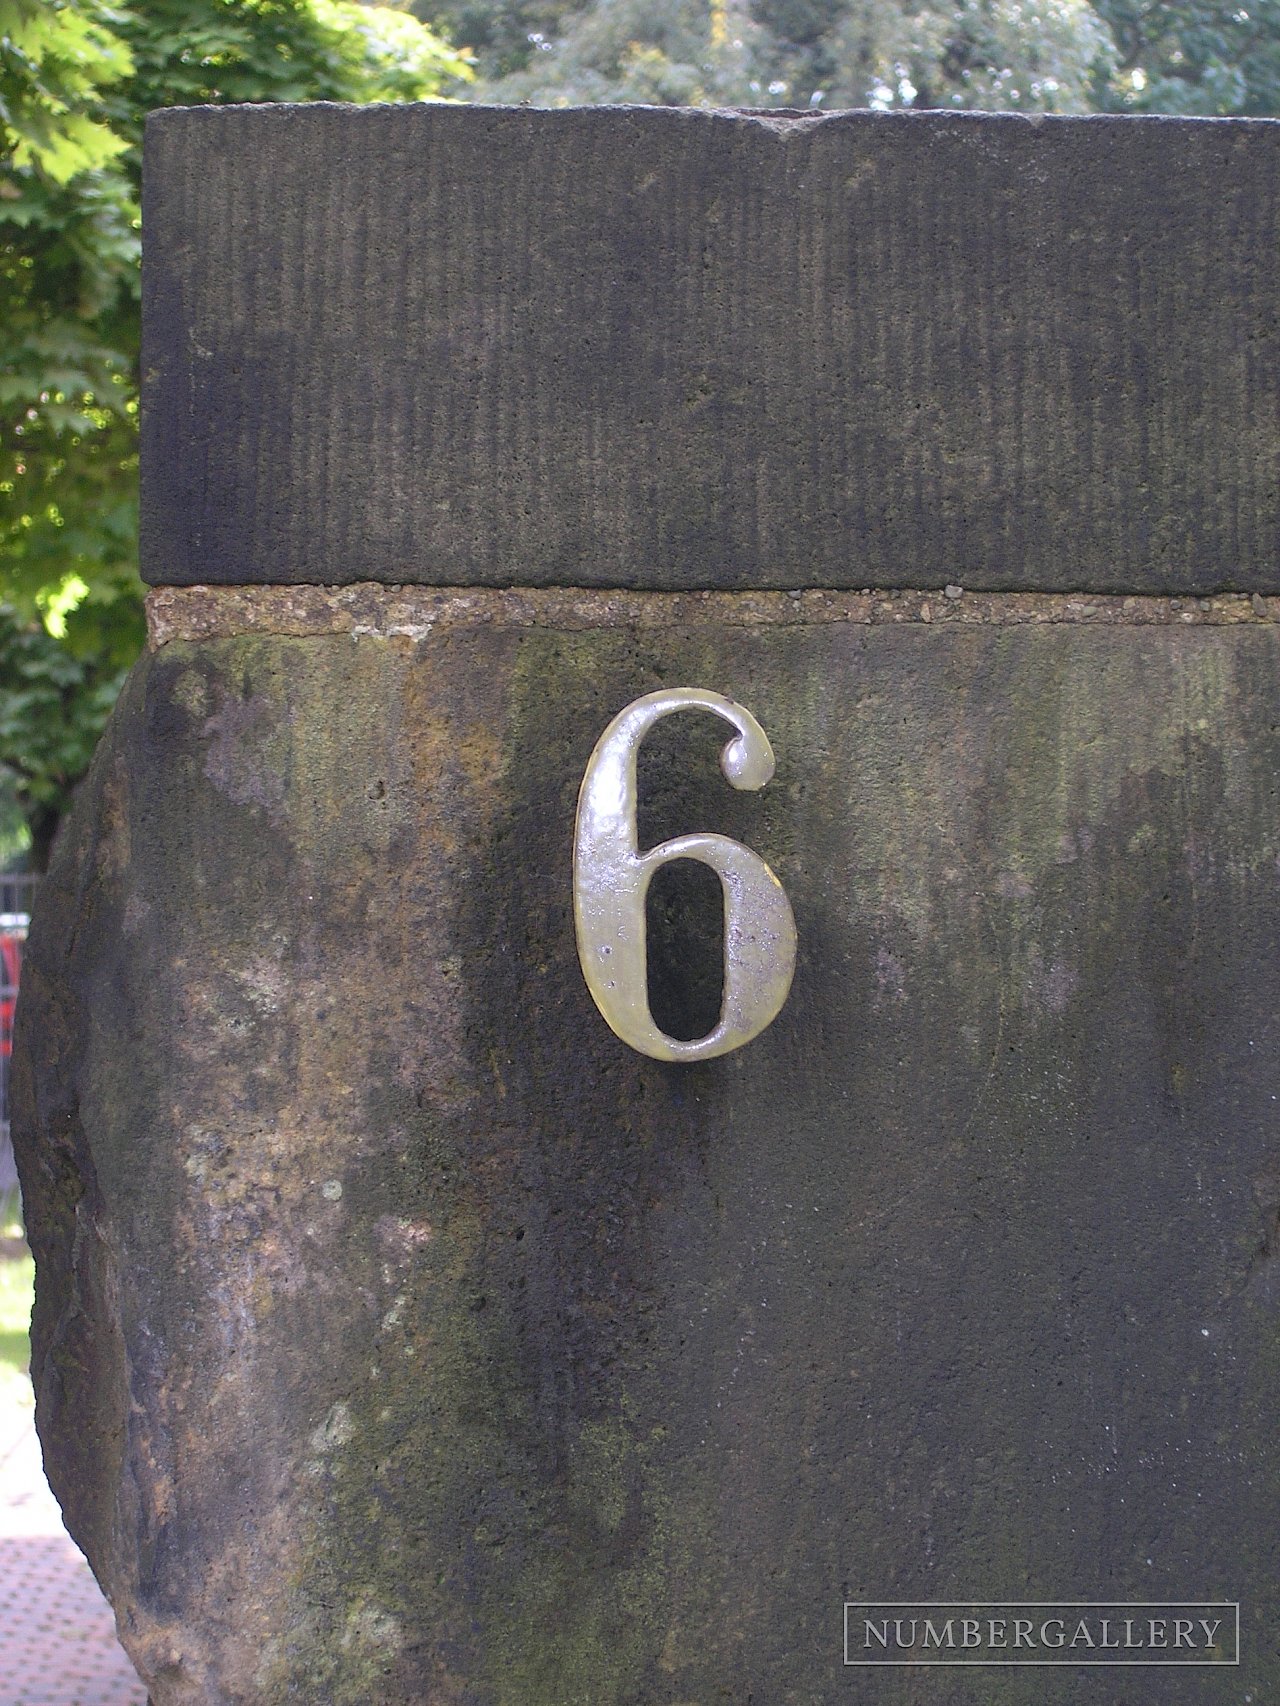 Hausnummer in Görlitz